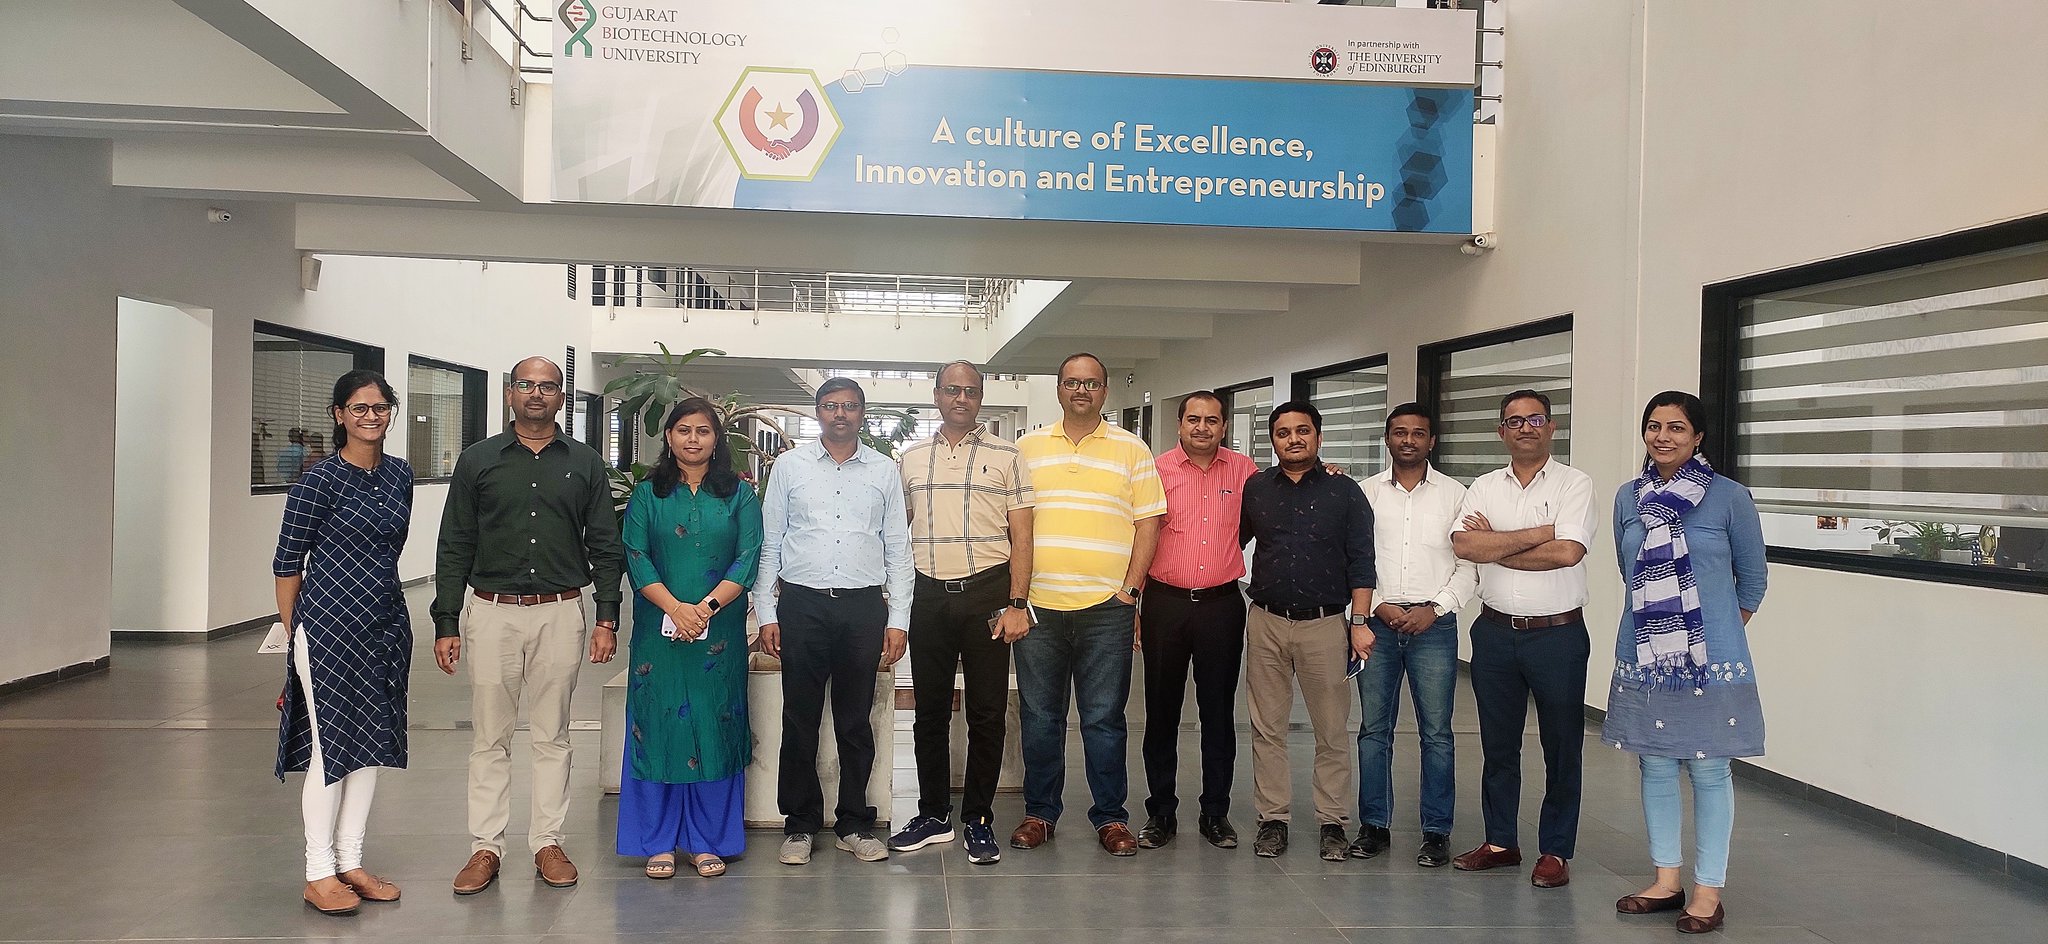 Gujarat Biotechnology University on Twitter "Faculty members from